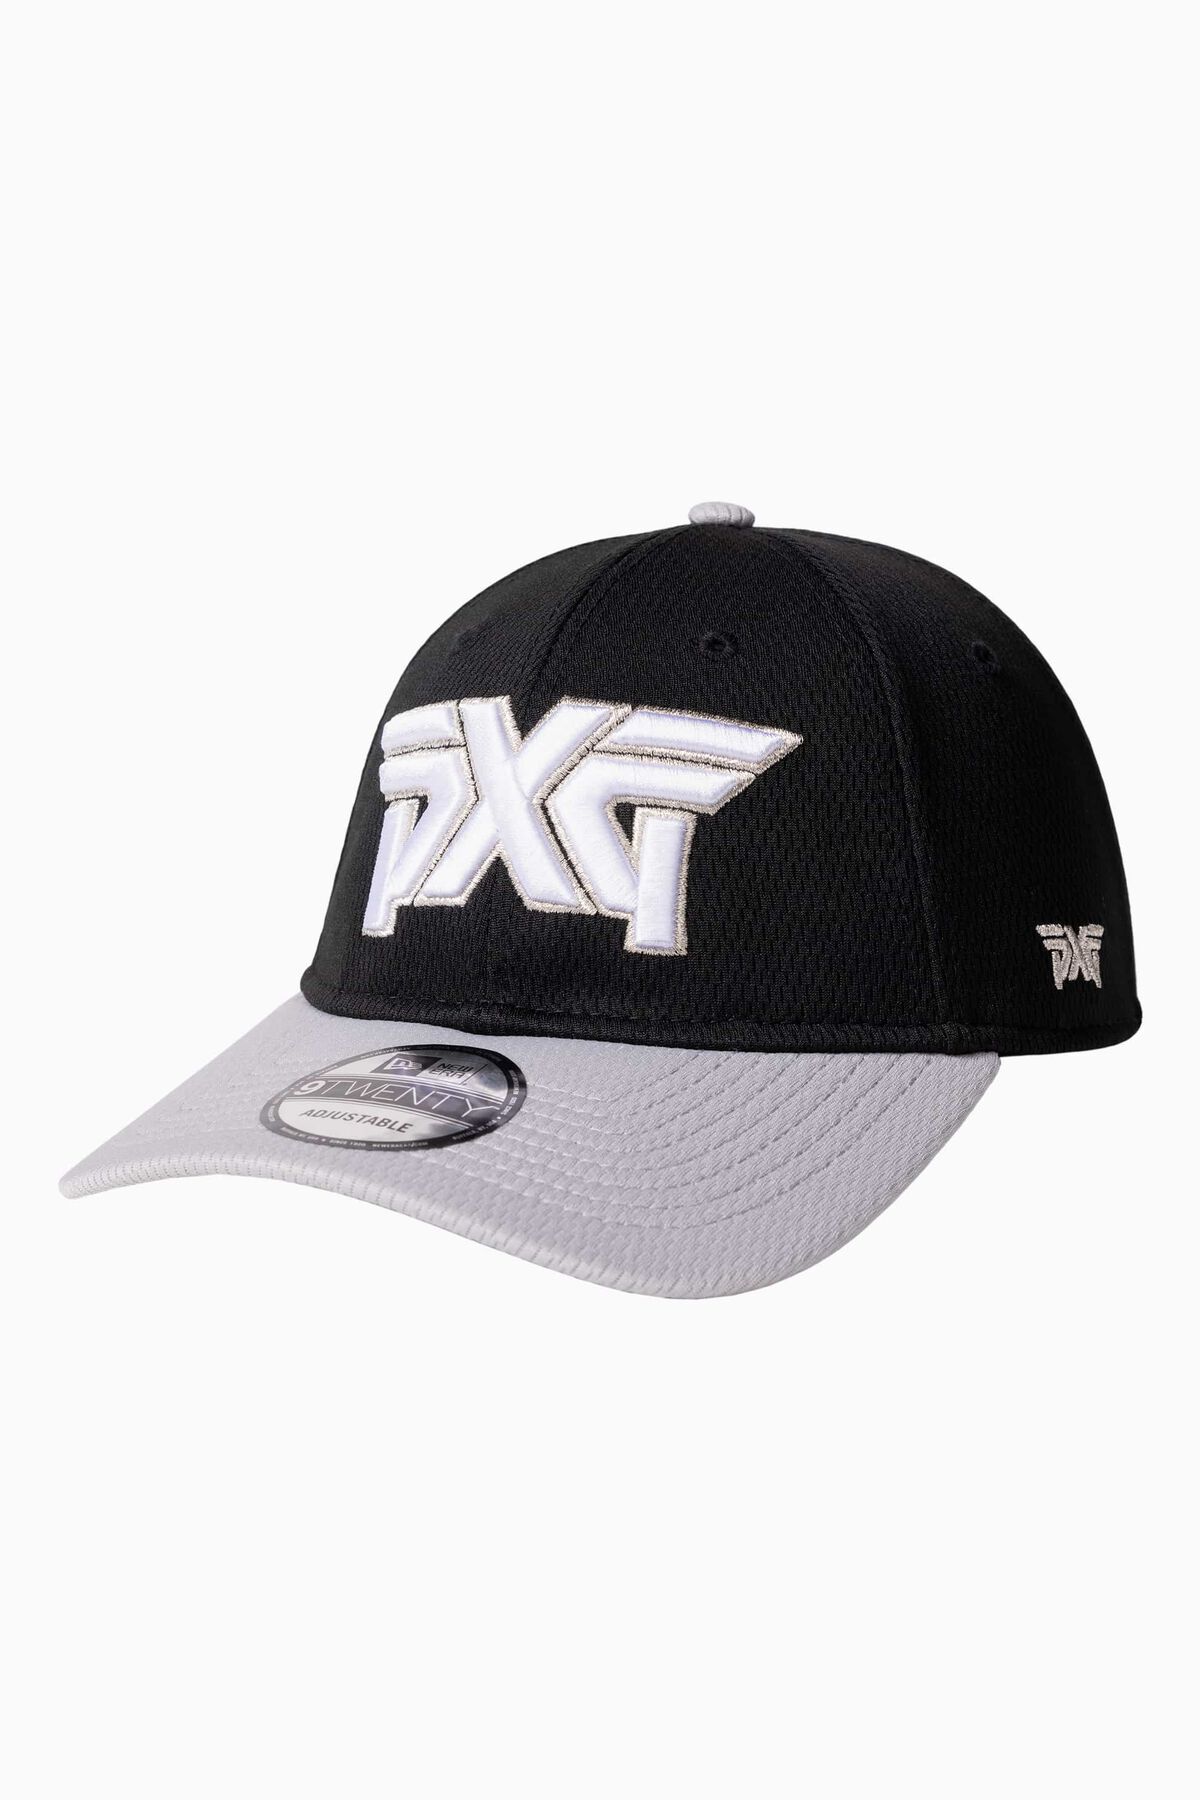 PXG San Antonio Black 9TWENTY Adjustable Cap 